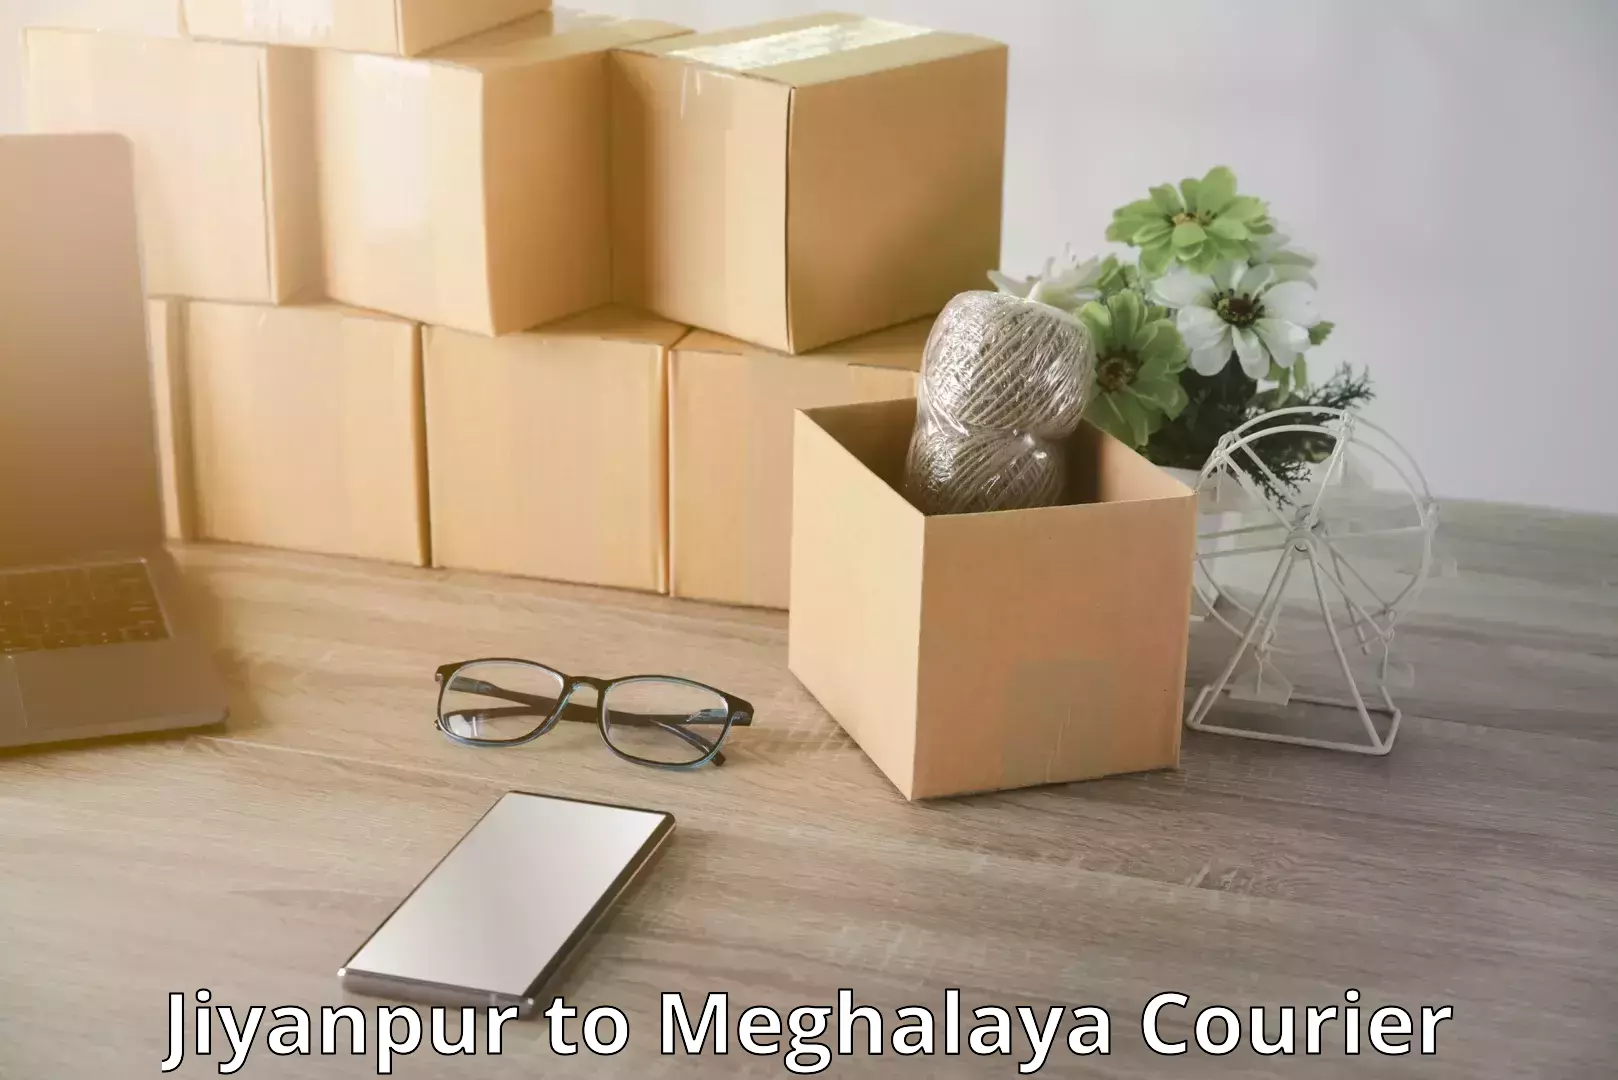 Luggage delivery app Jiyanpur to Meghalaya